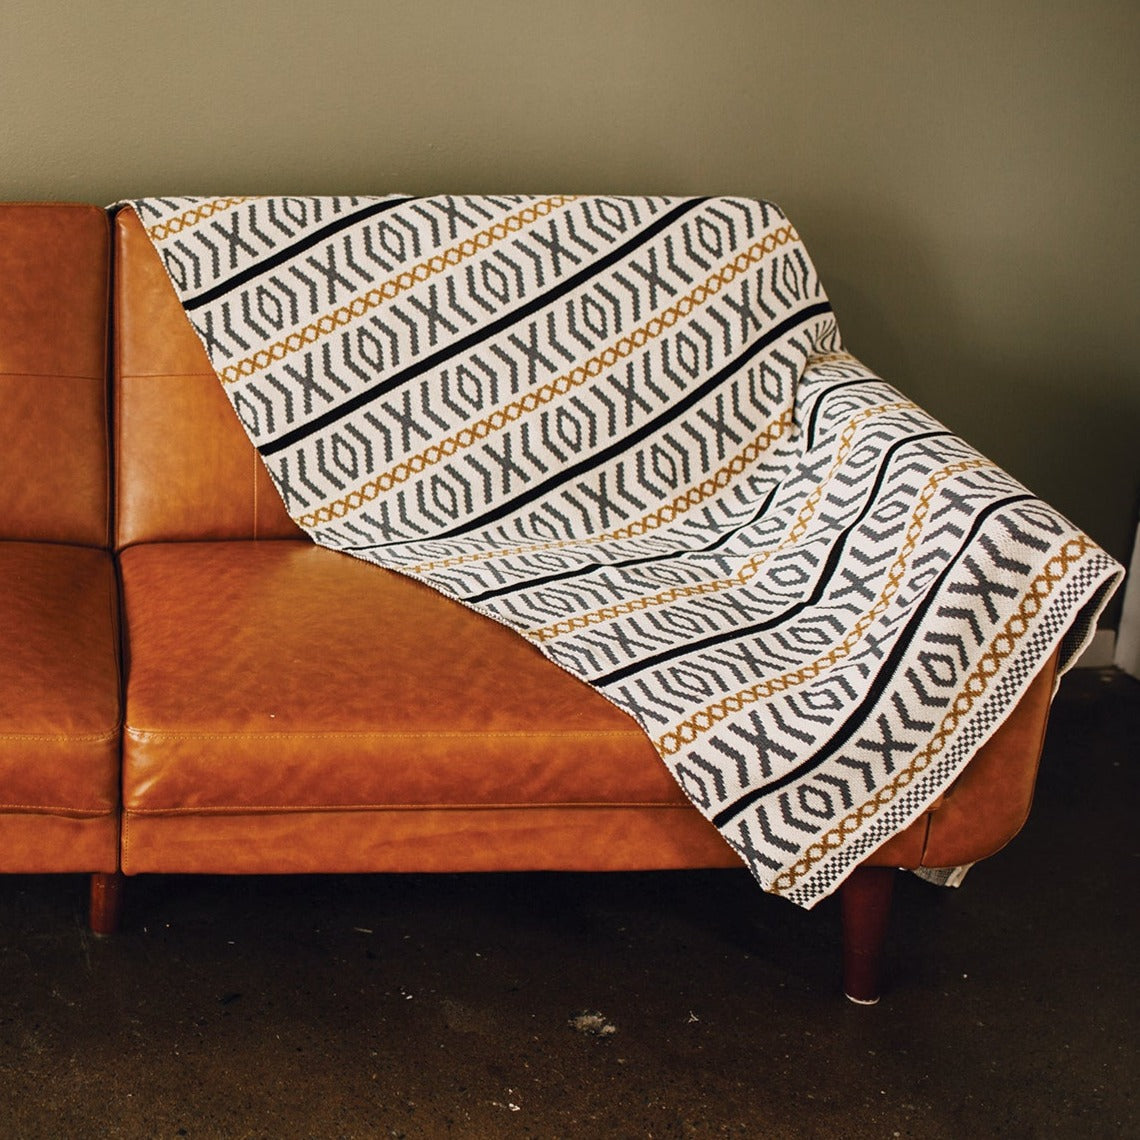 Seek & Swoon Otok Throw draped over a brown leather sofa.